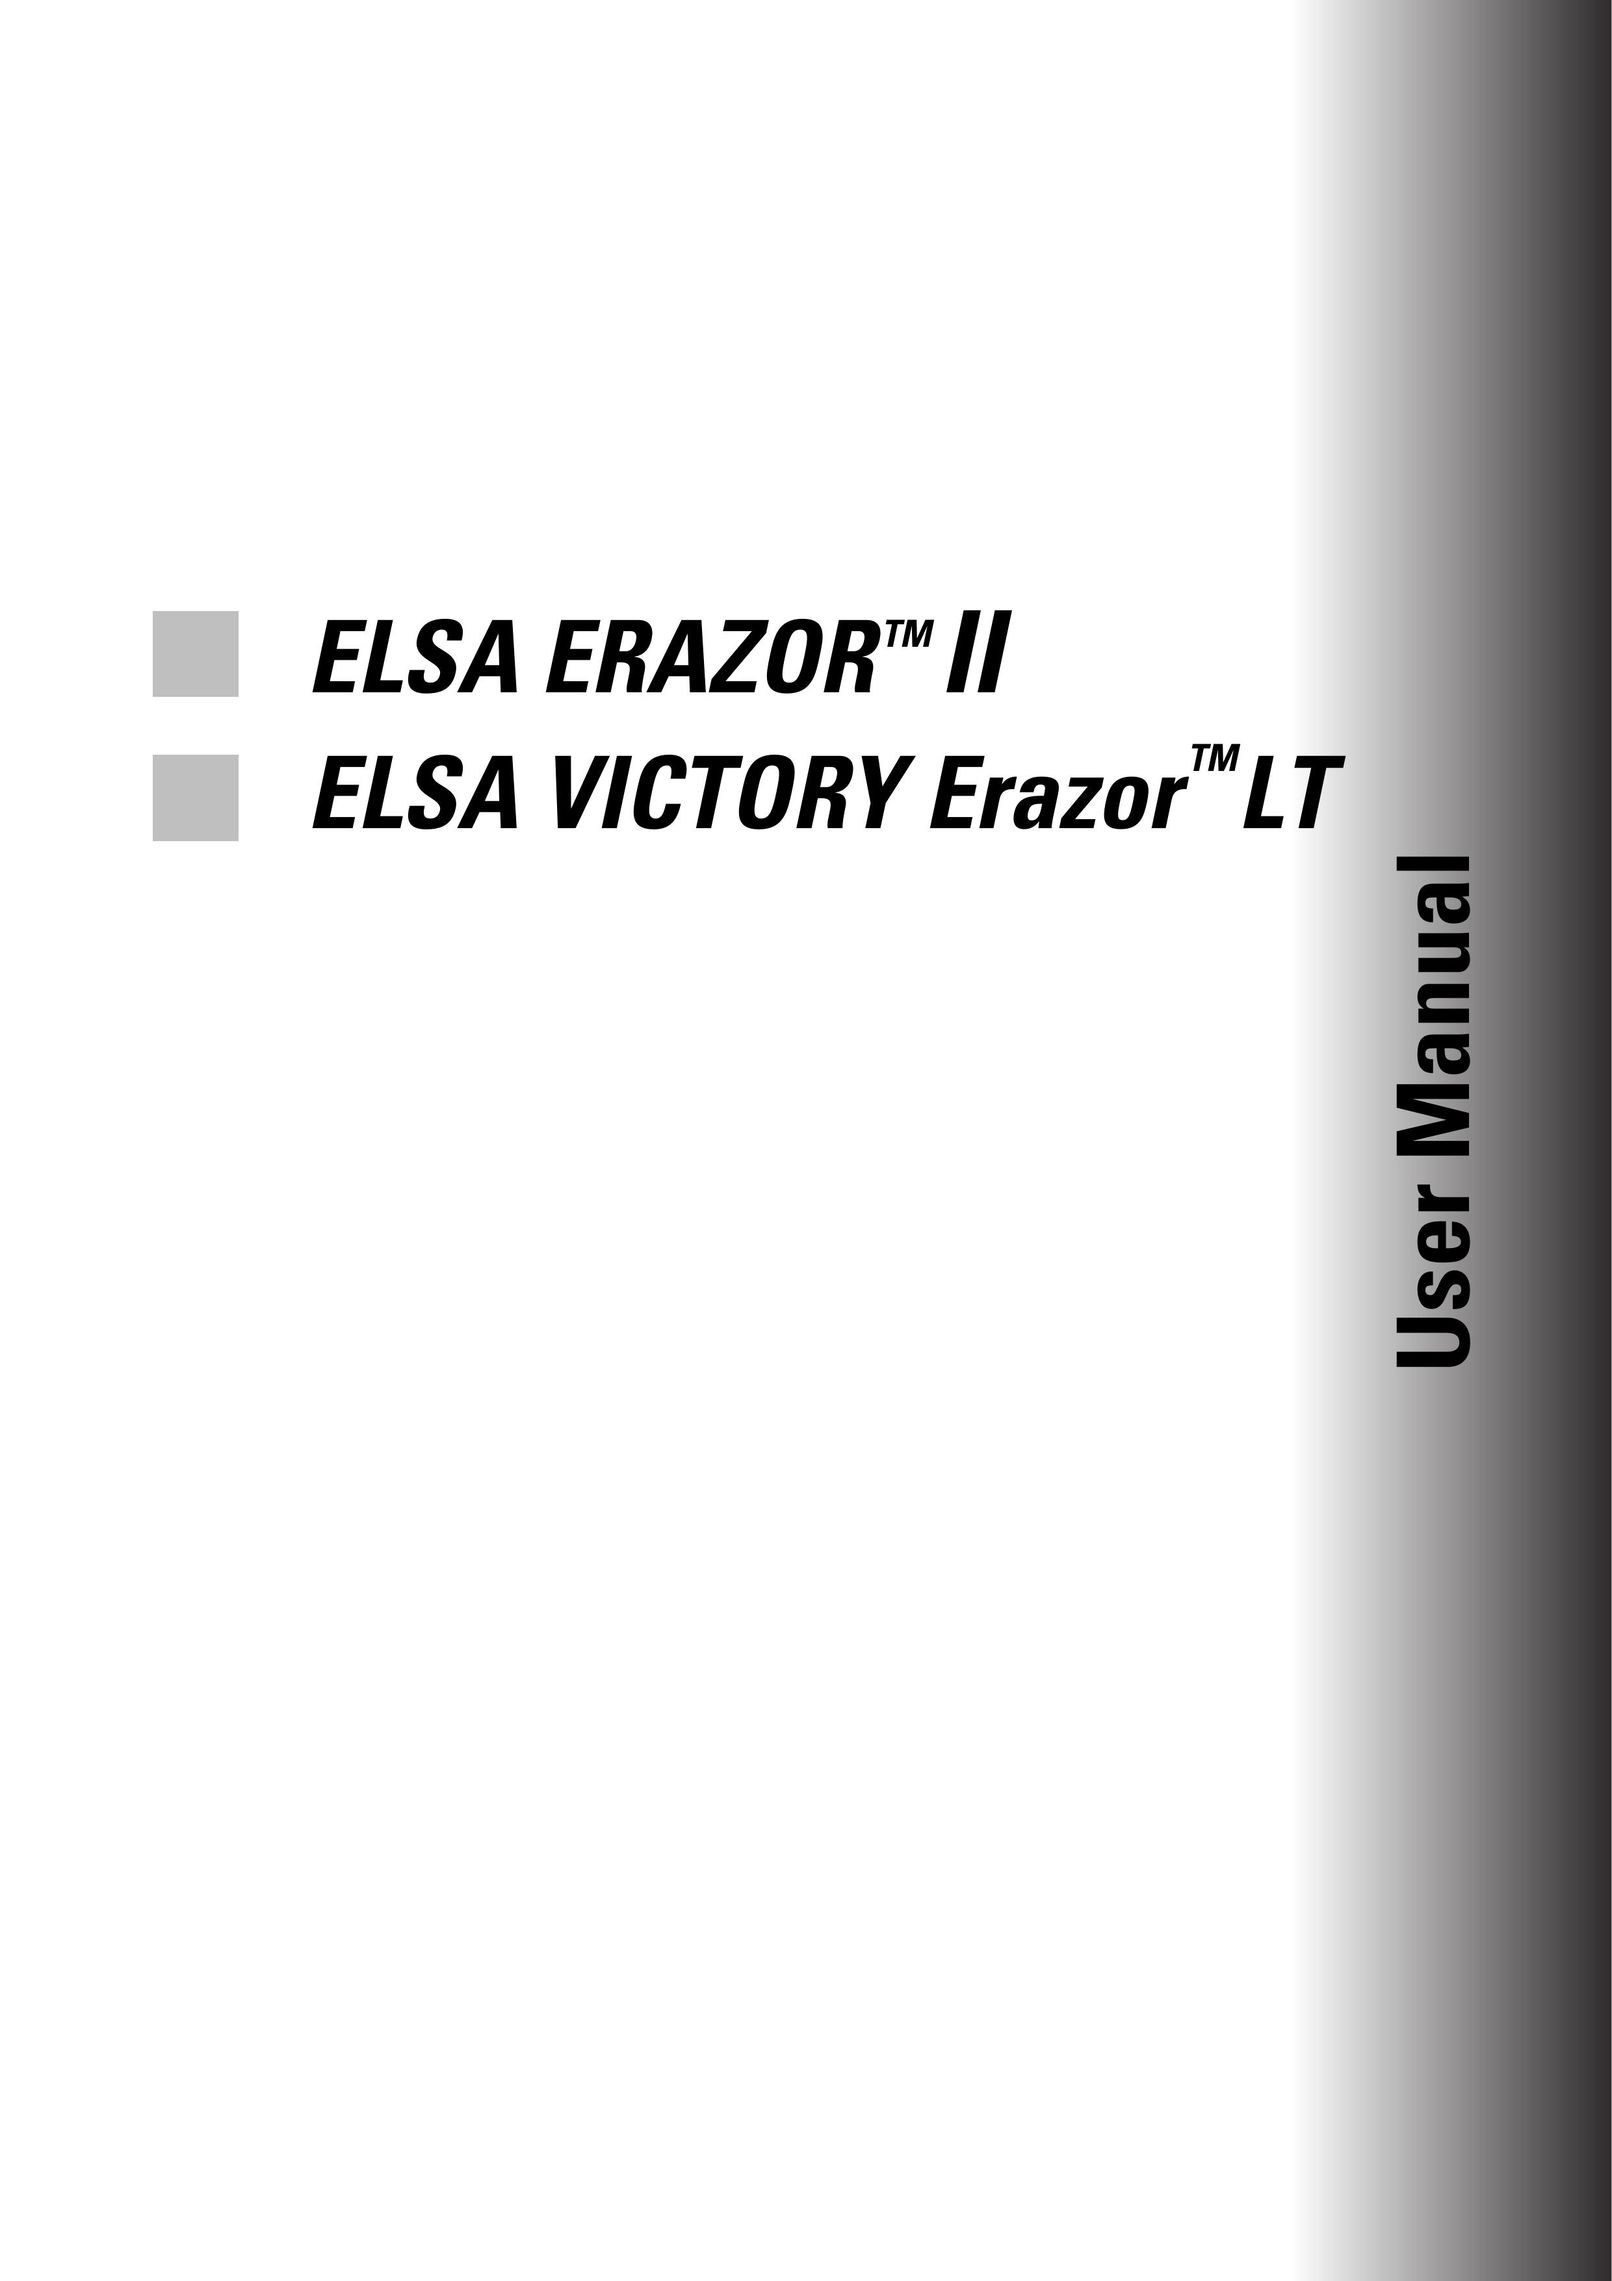 ELSA Victory Erazor LT Computer Hardware User Manual